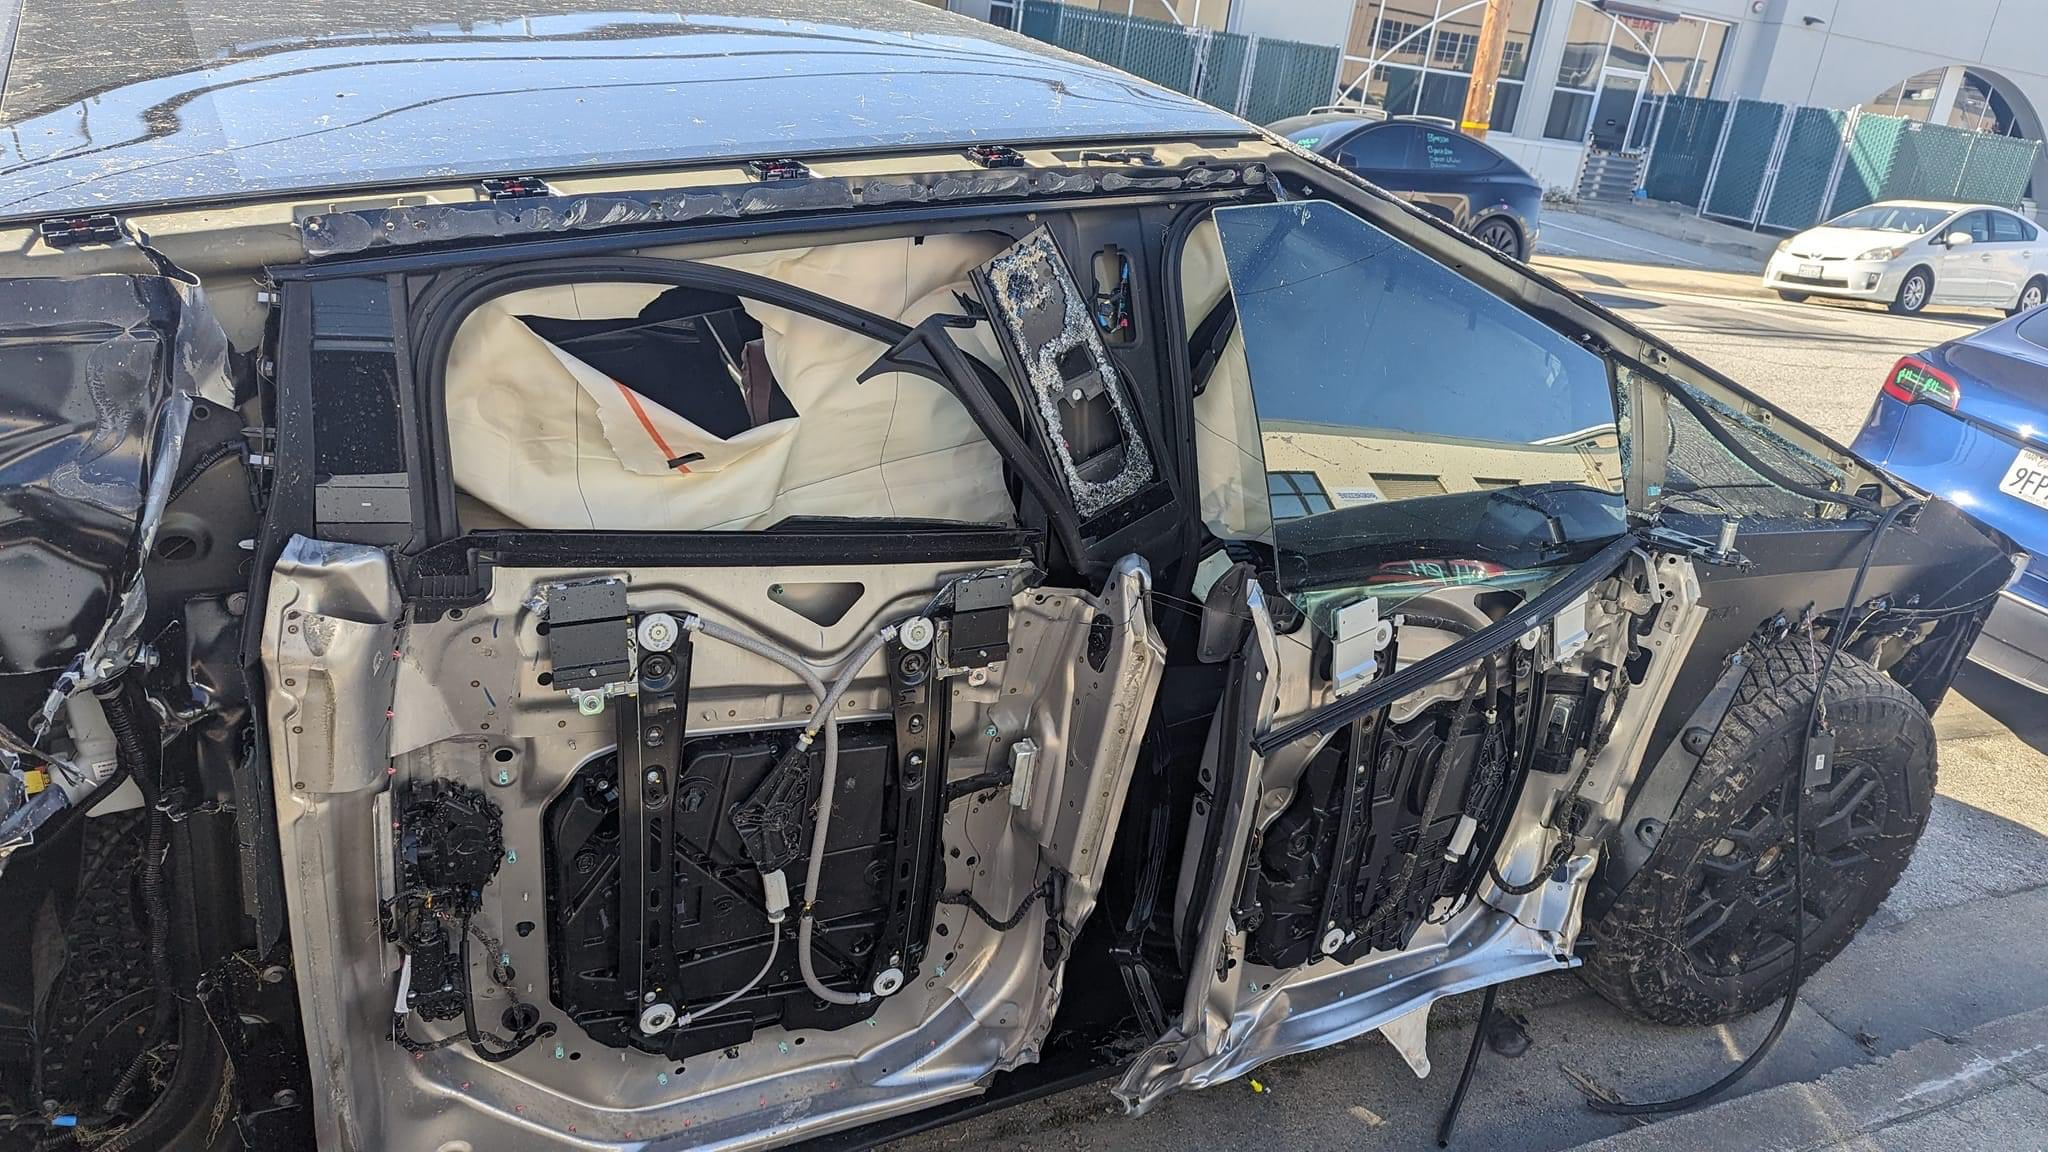 Tesla Cybertruck Cybertruck T-Bone accident at high speed - damage photos 1715884064925-qv